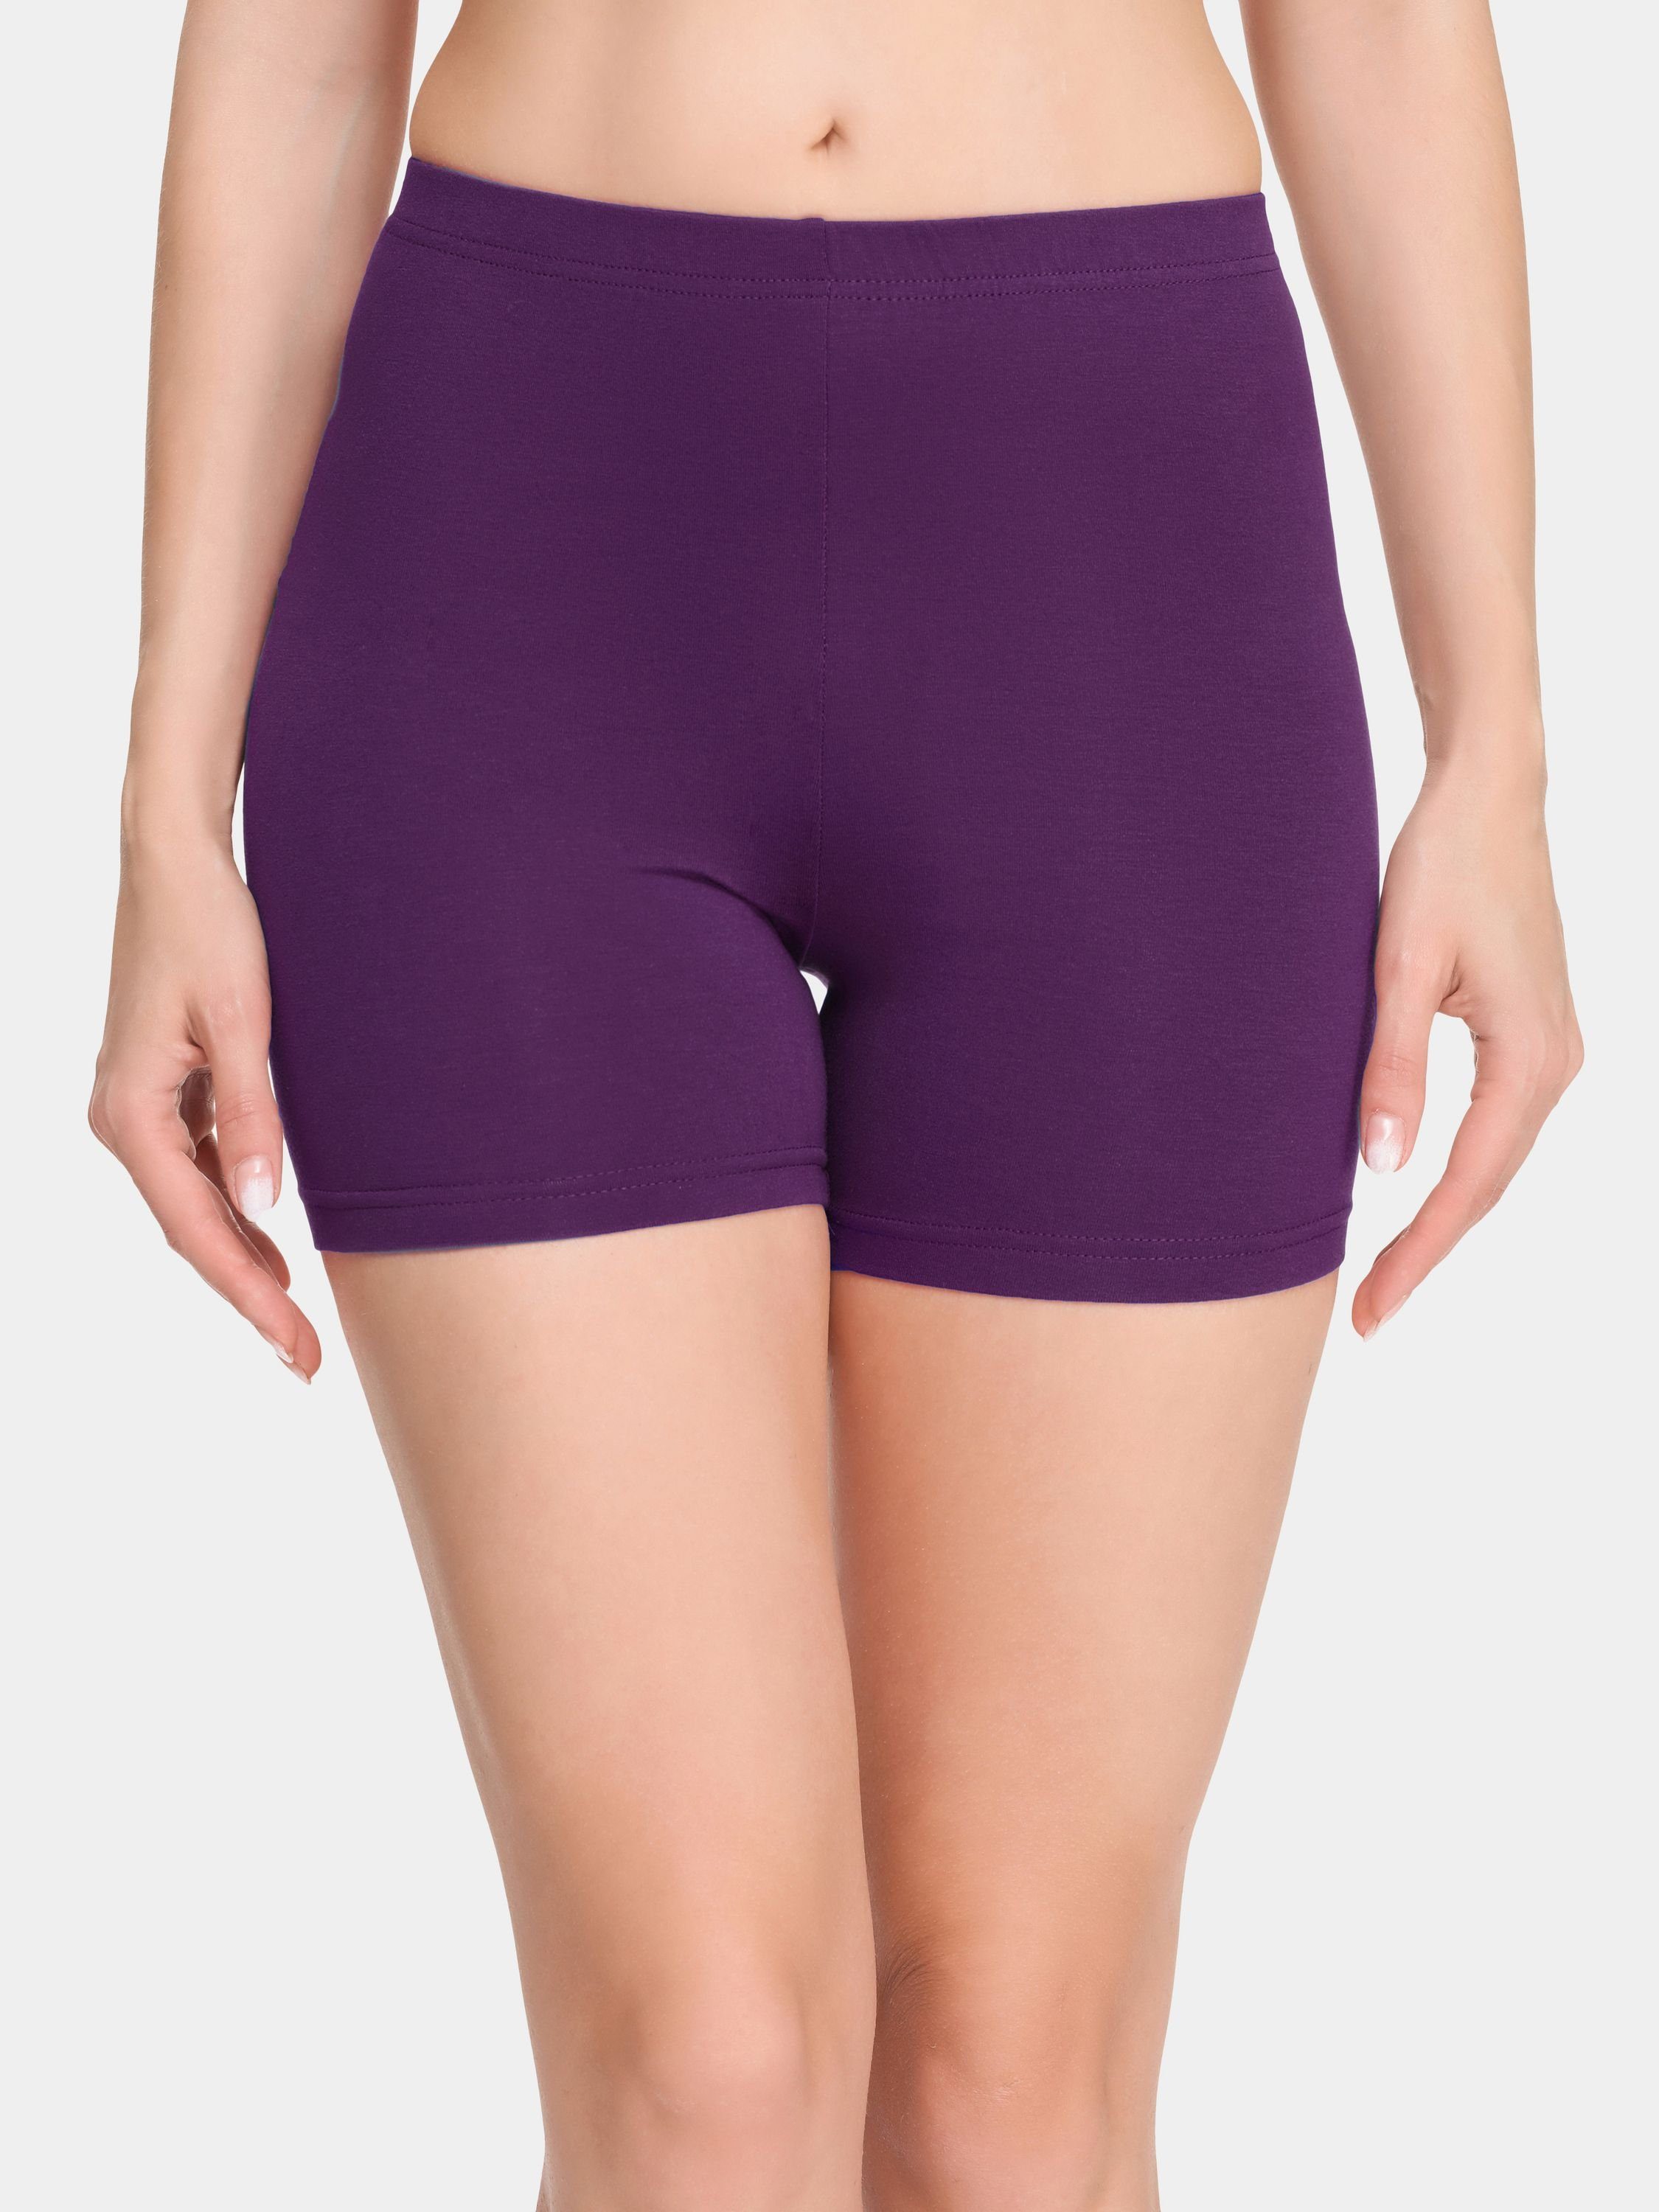 Damen Purpur Hotpants Radlerhose Leggings Style Merry MS10-392 Shorts Boxershorts Bund Unterhose elastischer (1-tlg)